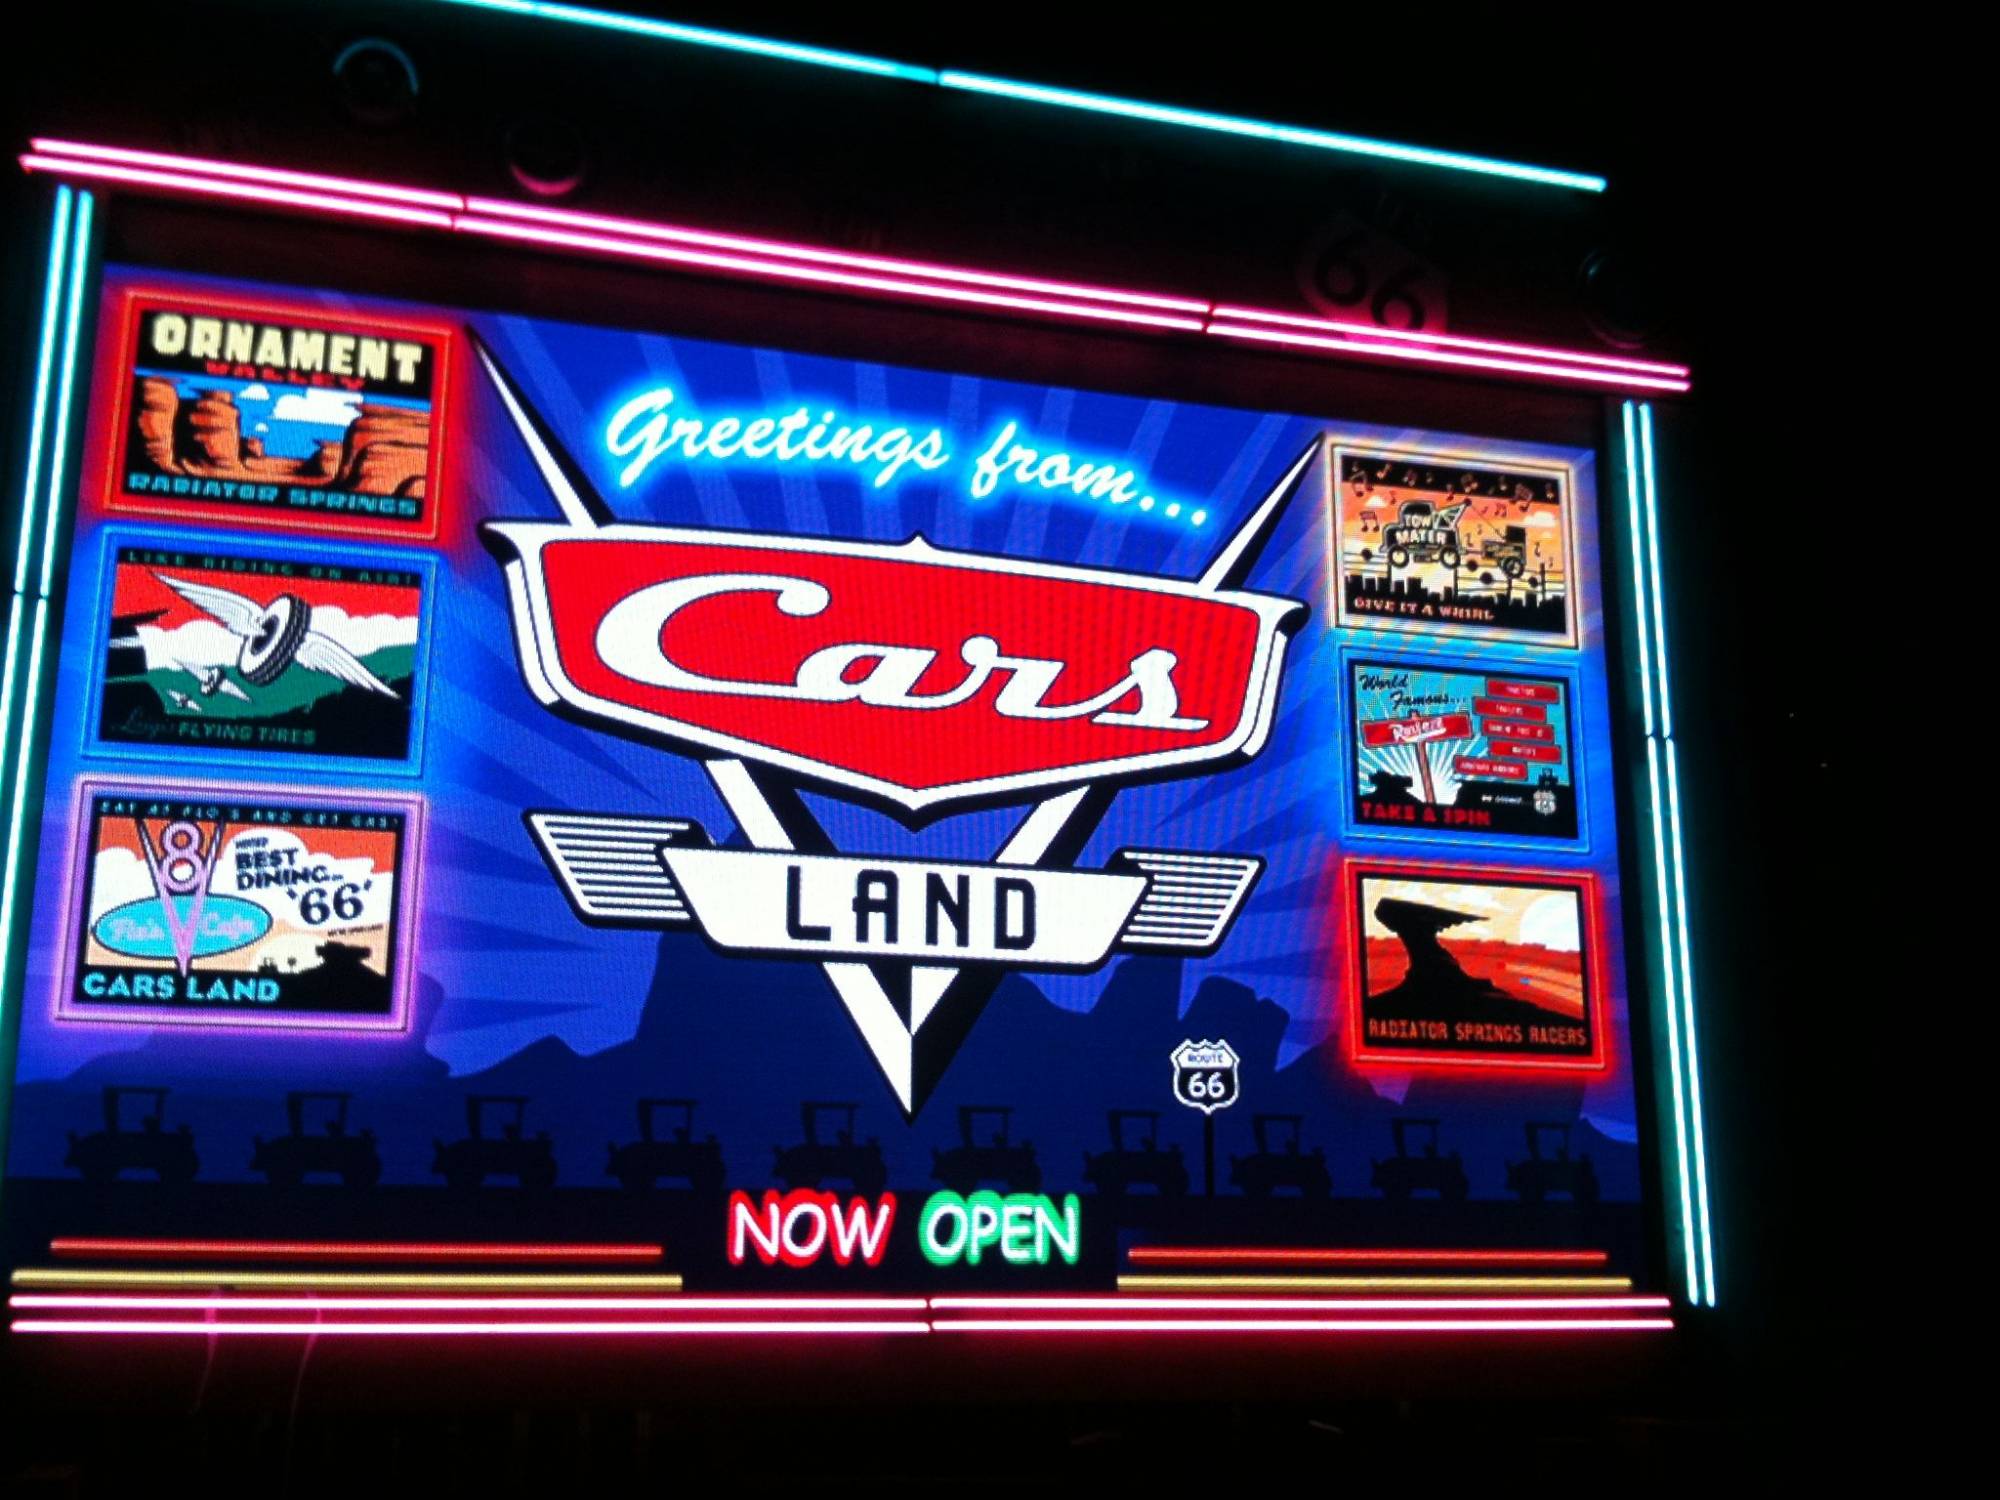 Explore the new offerings at Disney California Adventure in Cars Land |PassPorter.com